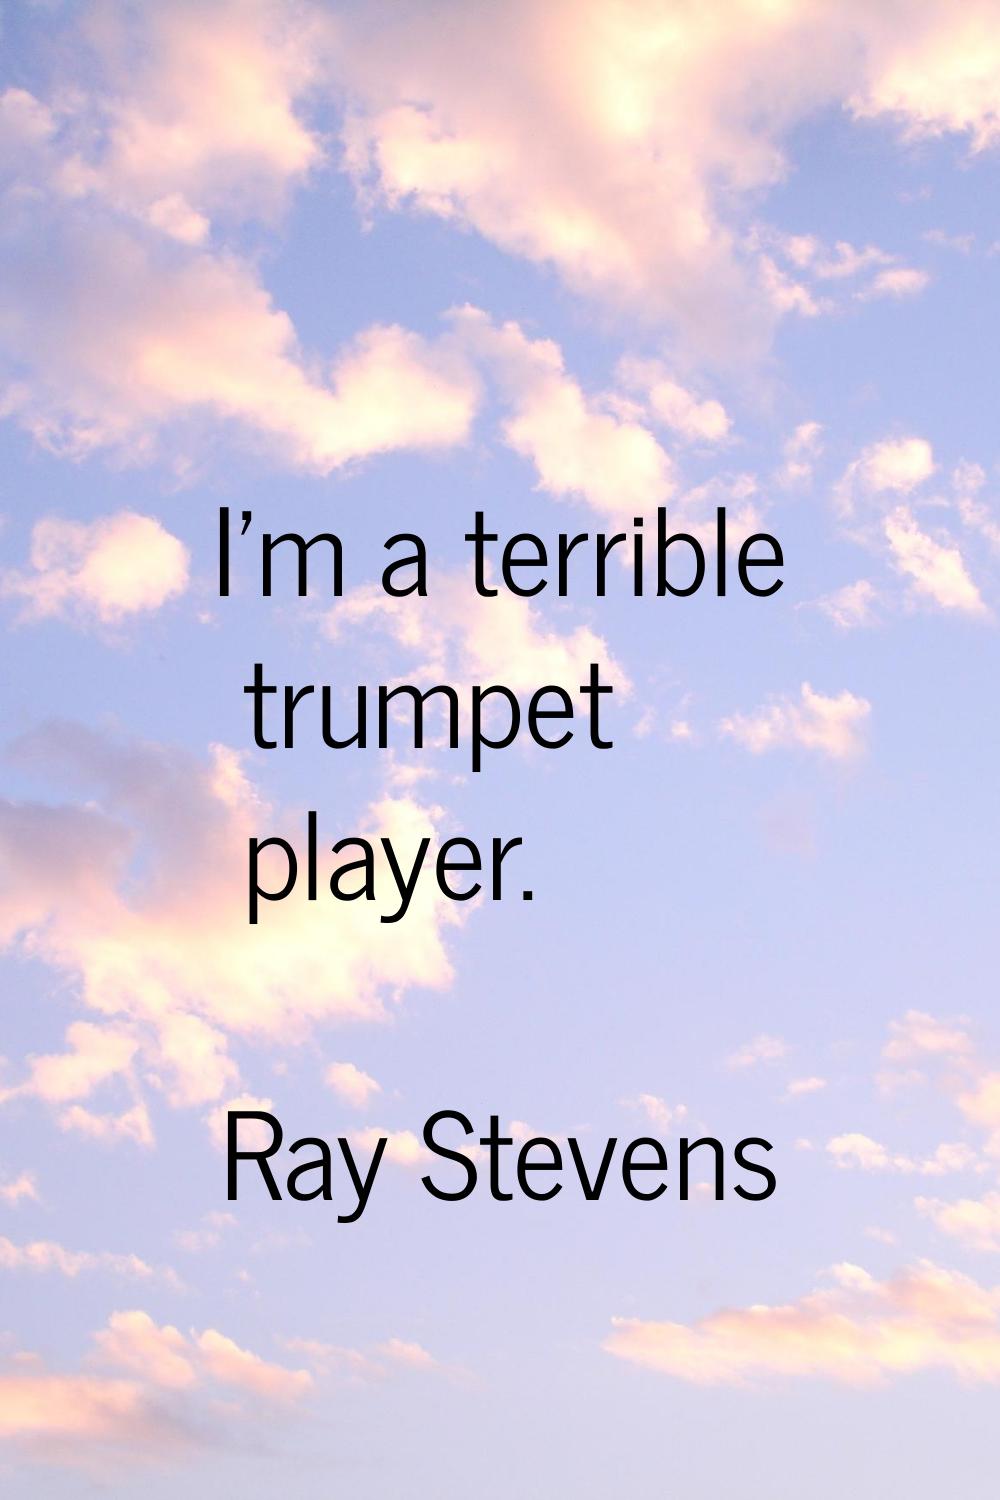 I'm a terrible trumpet player.